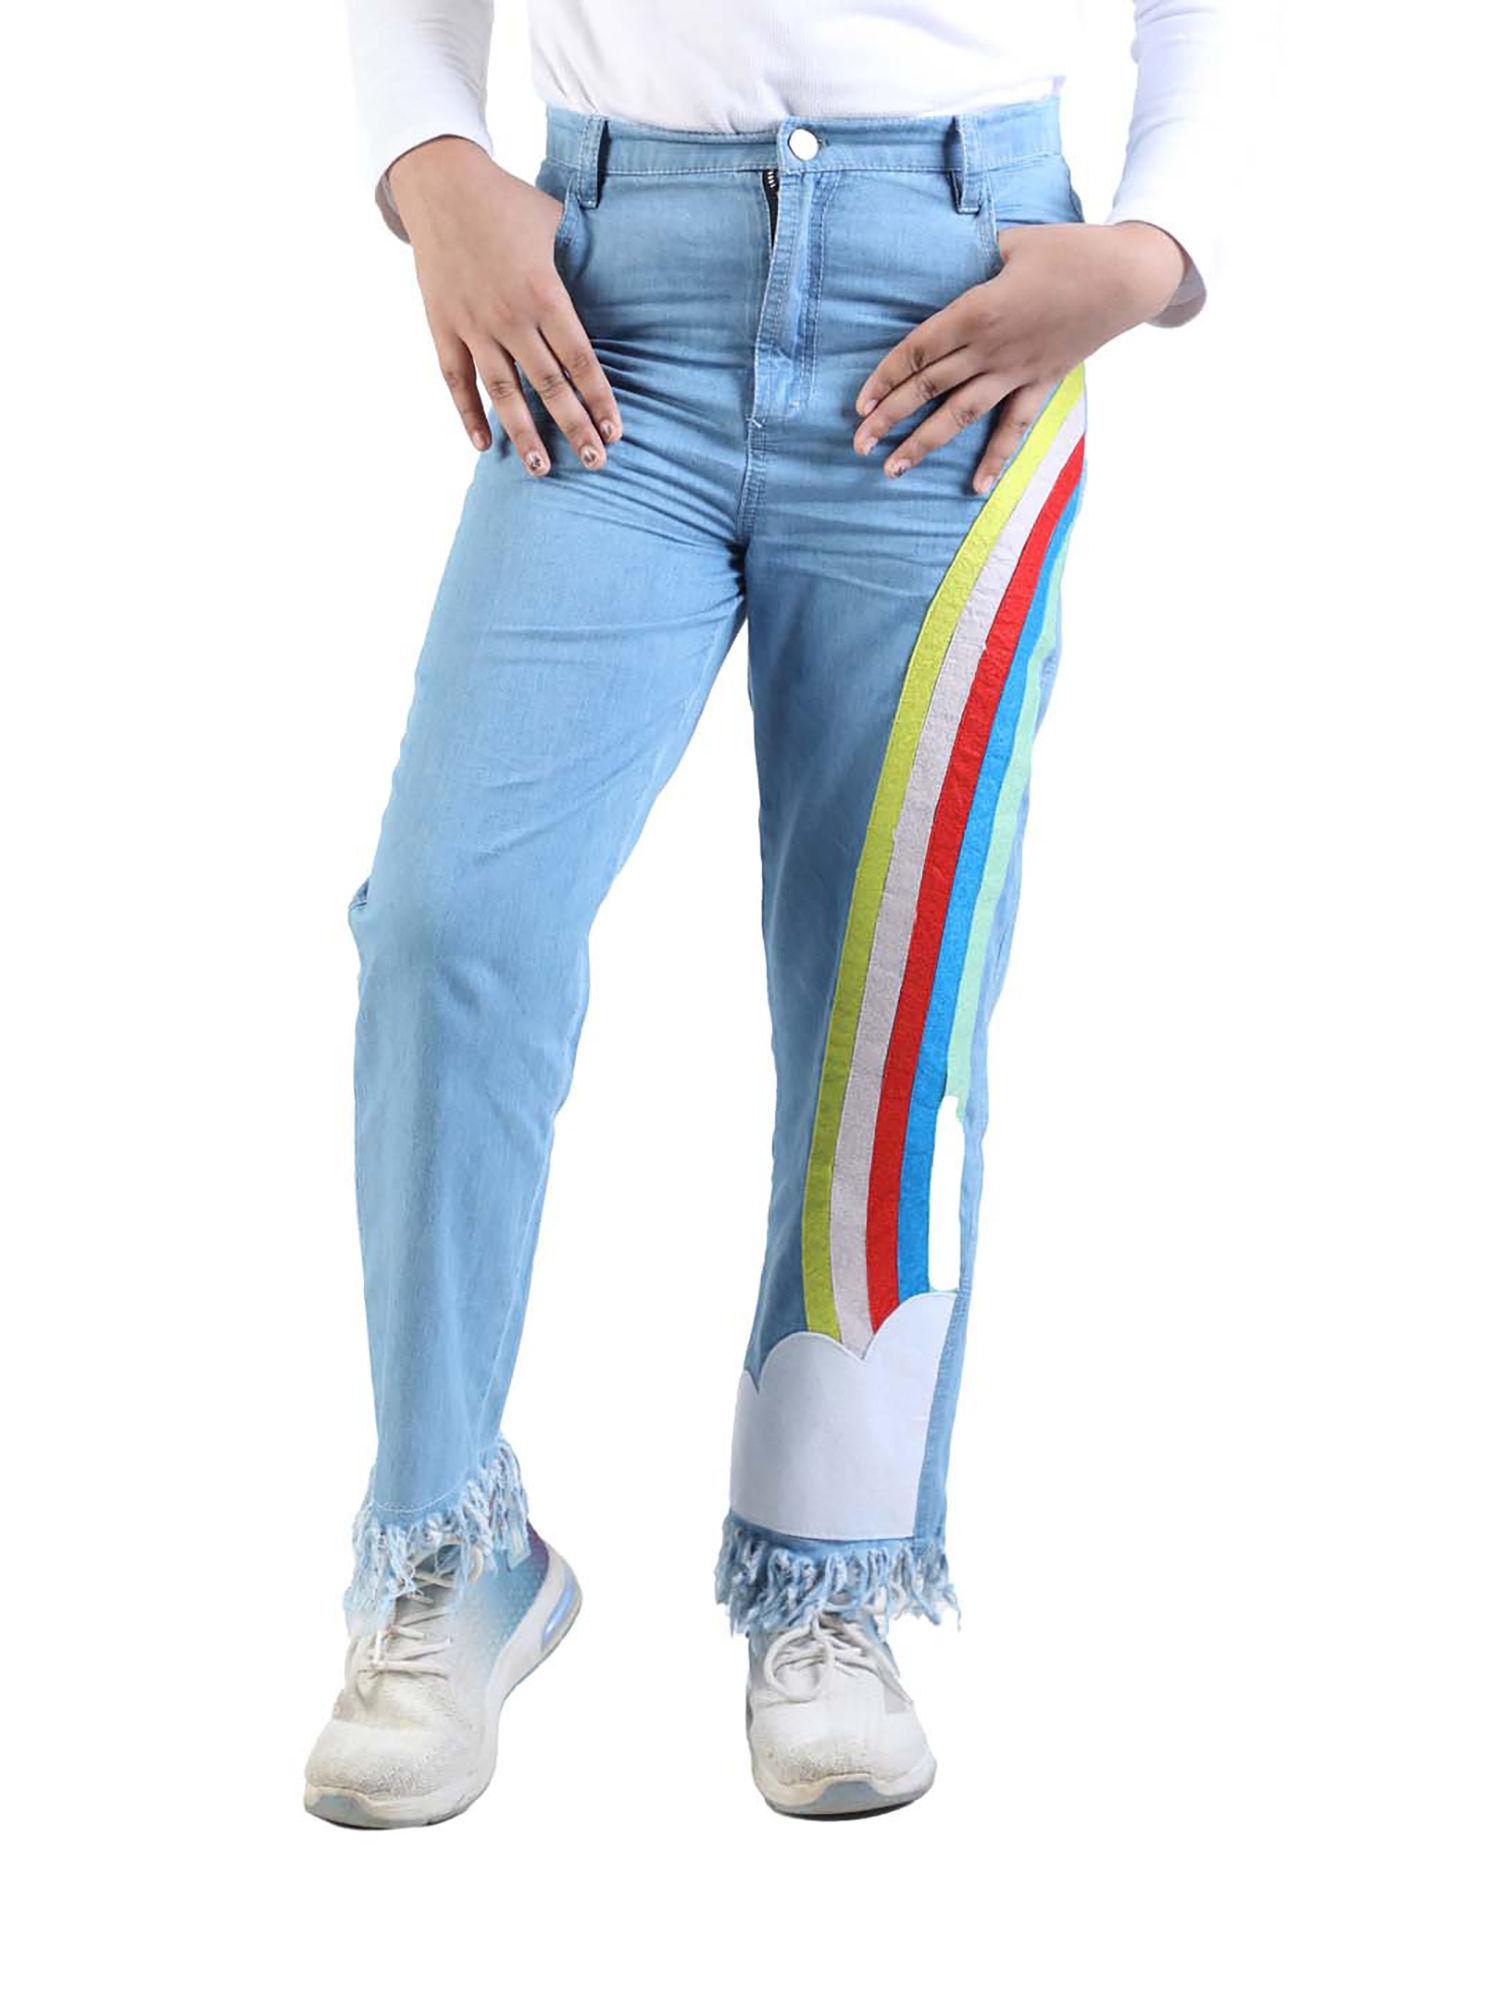 blue denim jeans for girls with rainbow felt